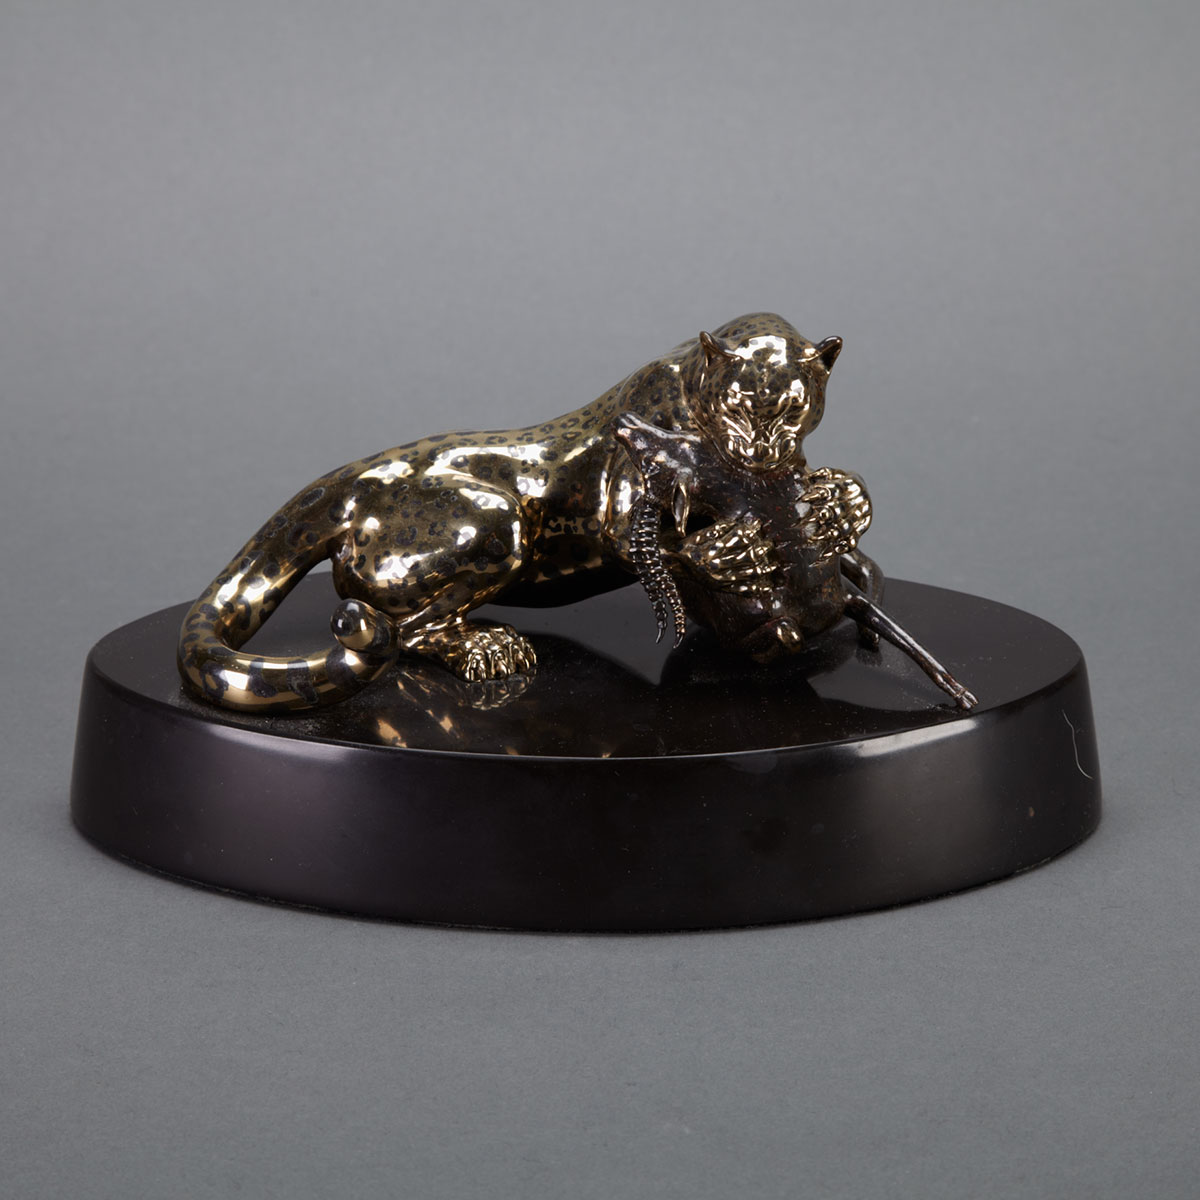 Gold Inlaid Bronze Group of a Cheetah 17826b